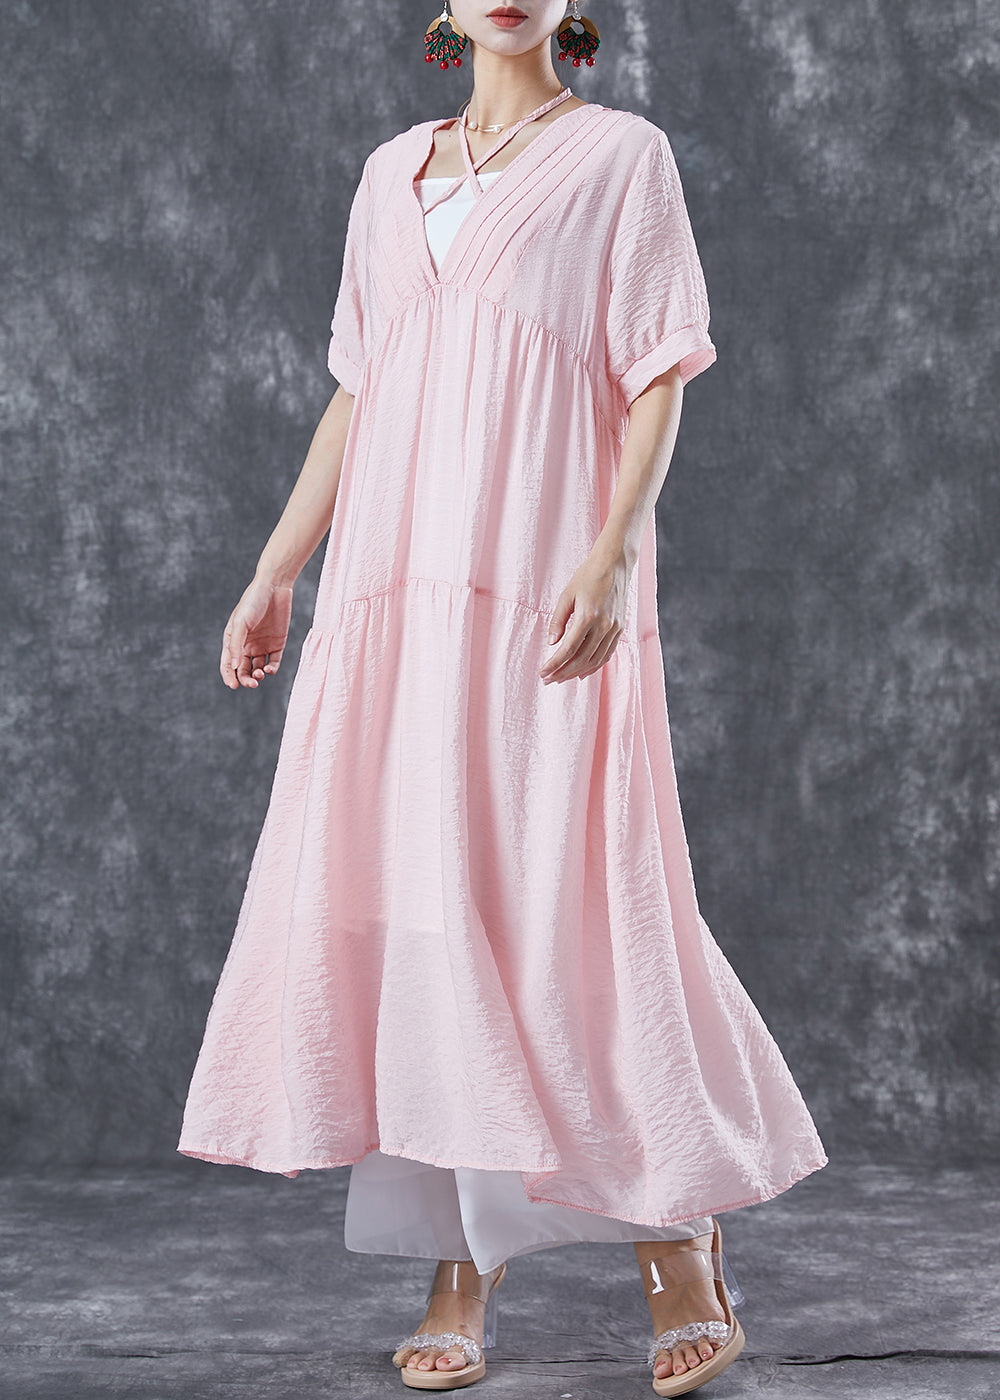 French Pink V Neck Patchwork Exra Large Hem Cotton Holiday Dress Summer LY5661 - fabuloryshop